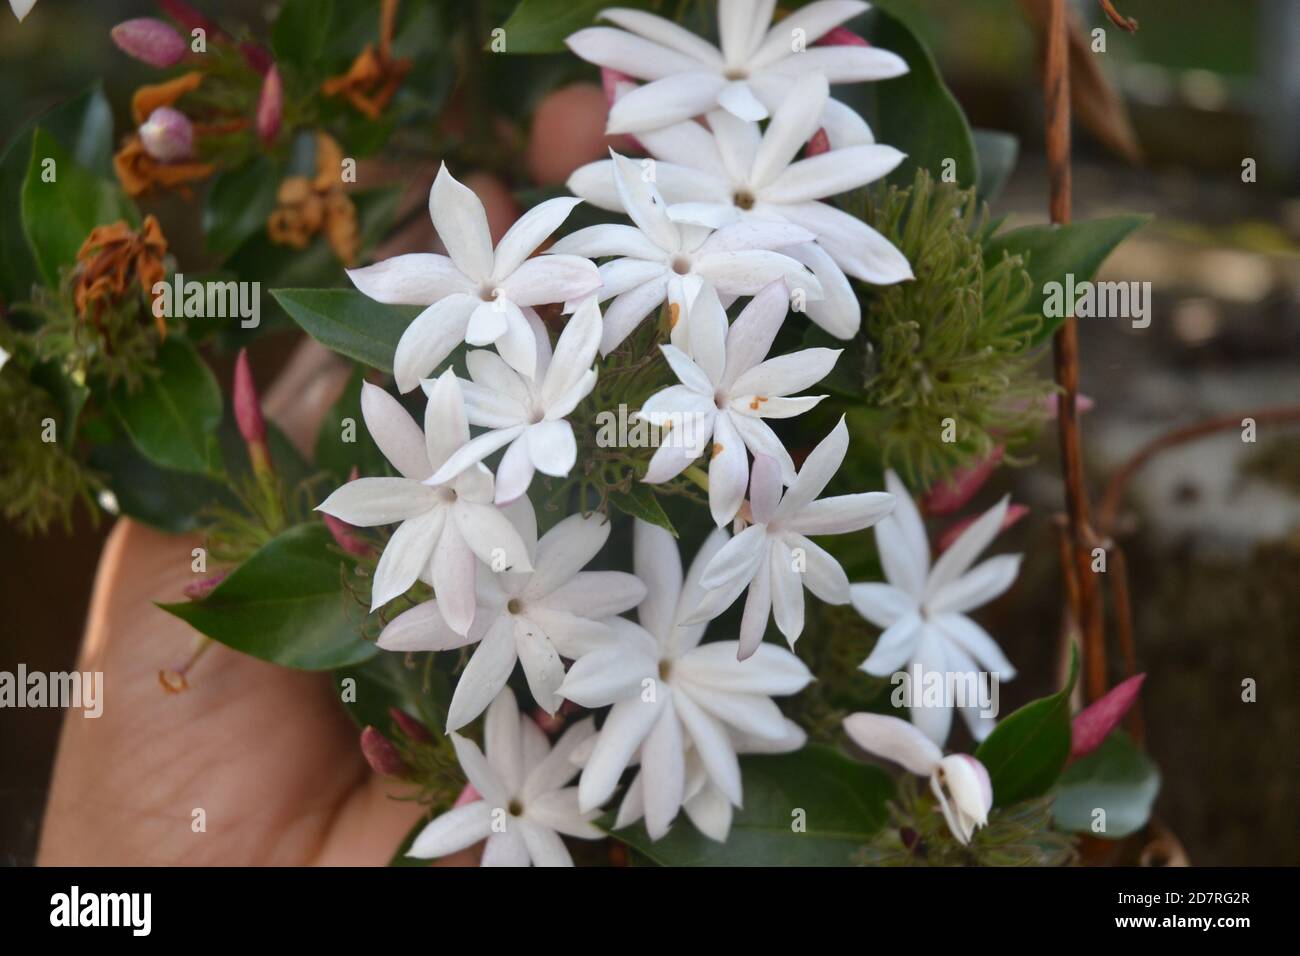 Jasmine flowers in the garden. Stock Photo